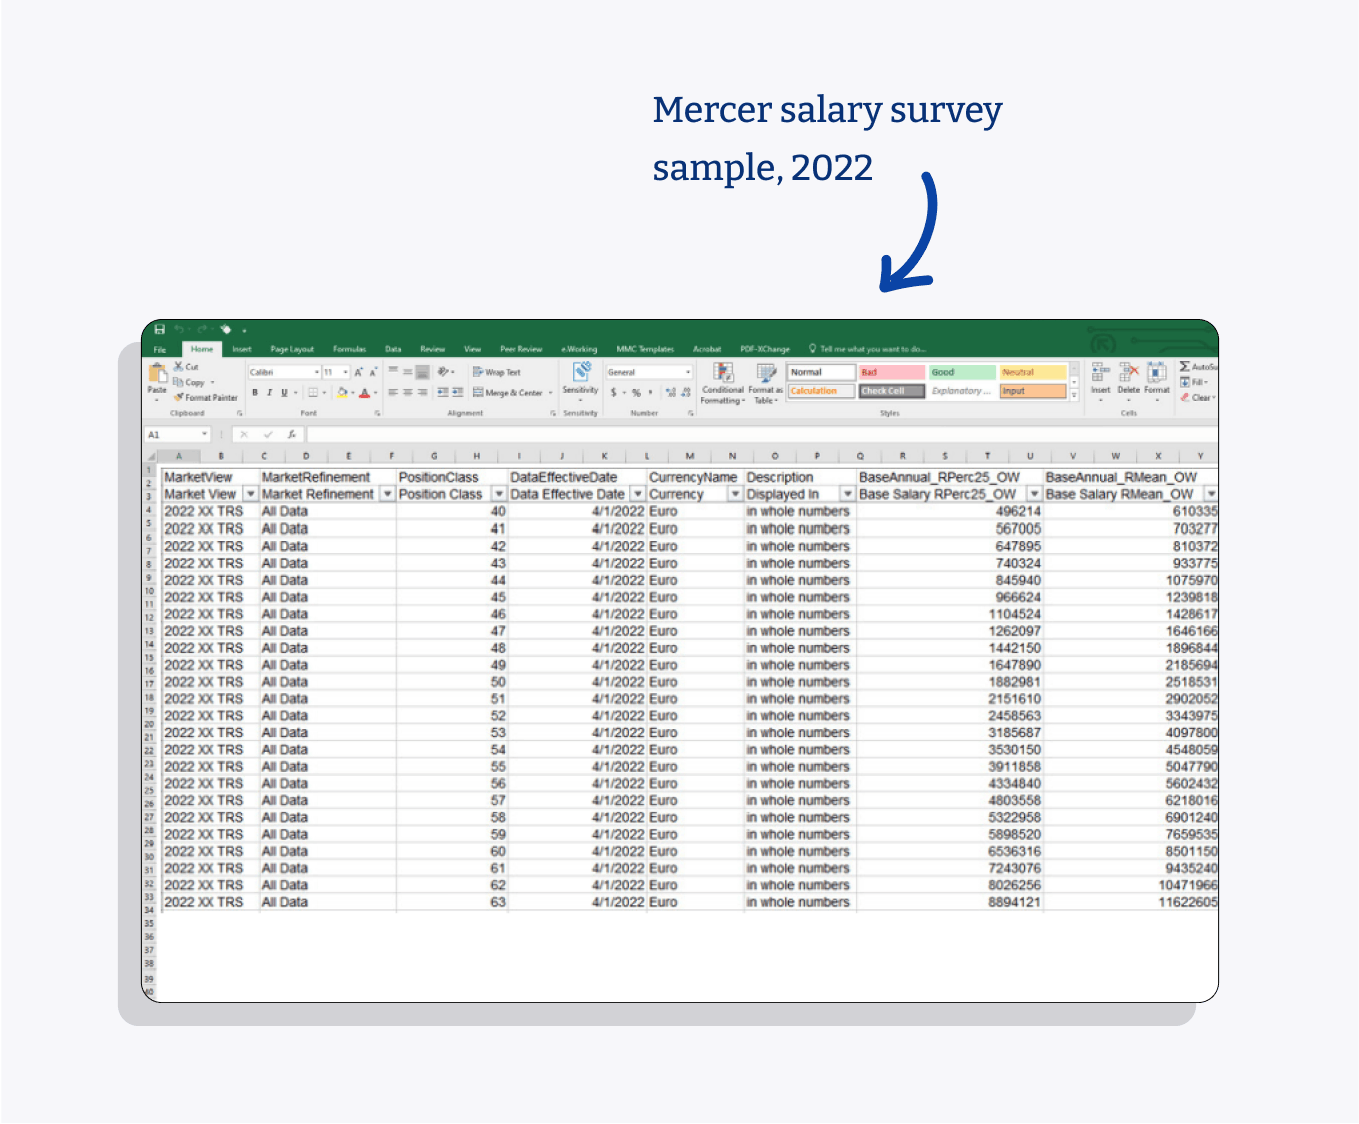 Spreadsheet screenshot showing an example of a salary survey dataset from Mercer.